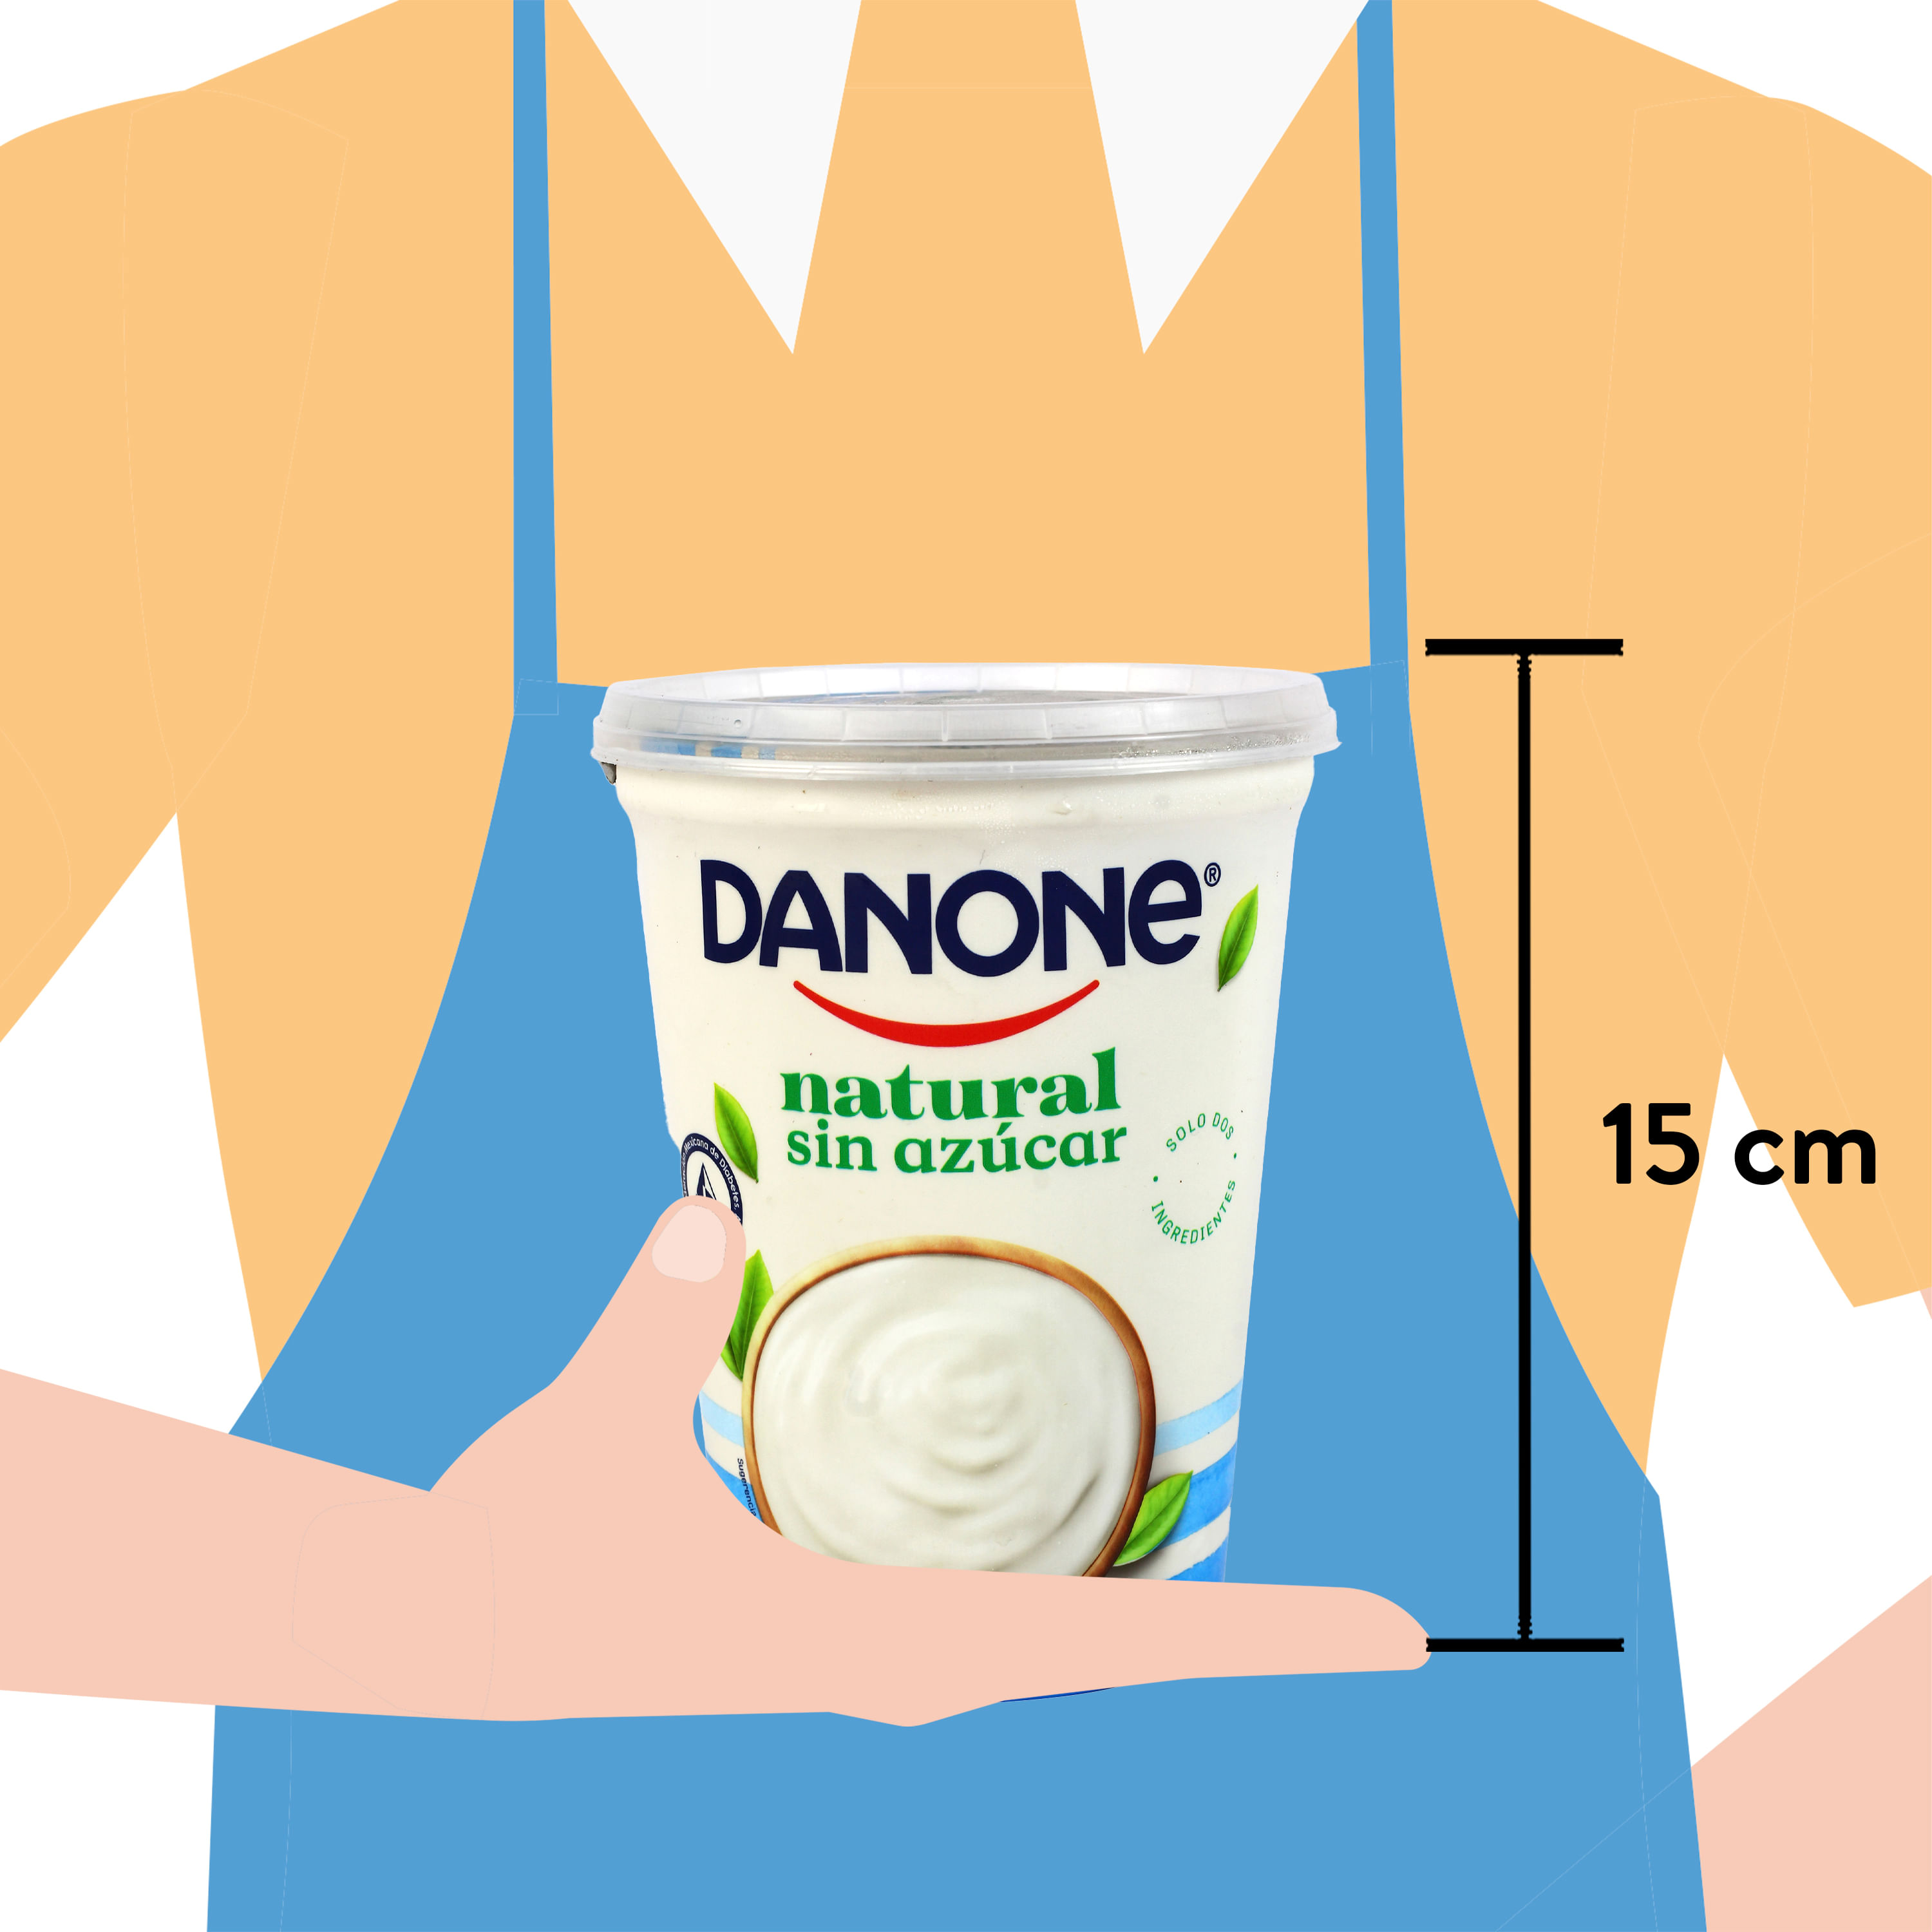 Comprar Yogurt Entero Dos Pinos Natural -500gr